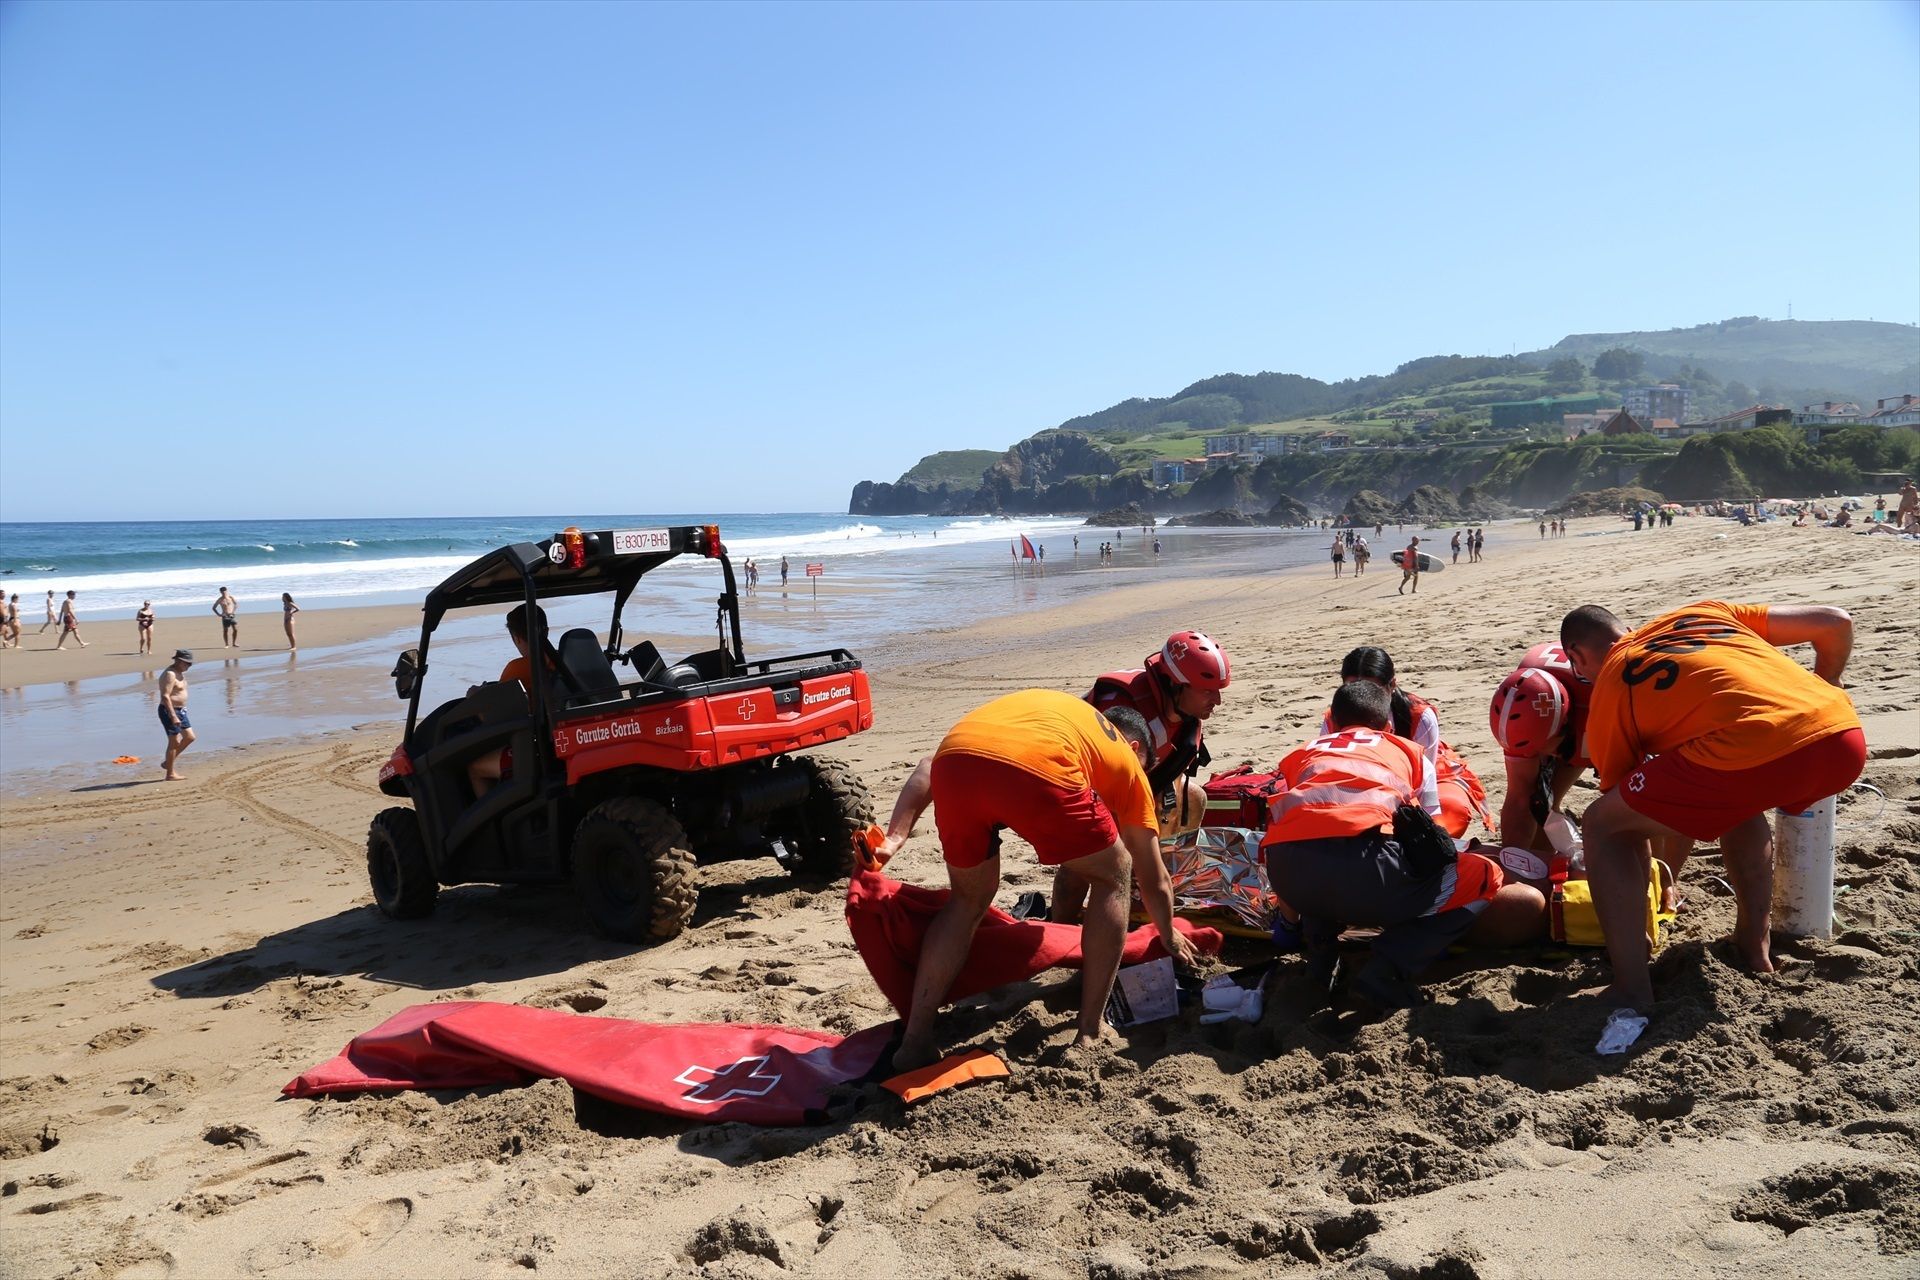 El padre de la bebé muerta en una playa de Formentera se levantó a ponerle el chupete